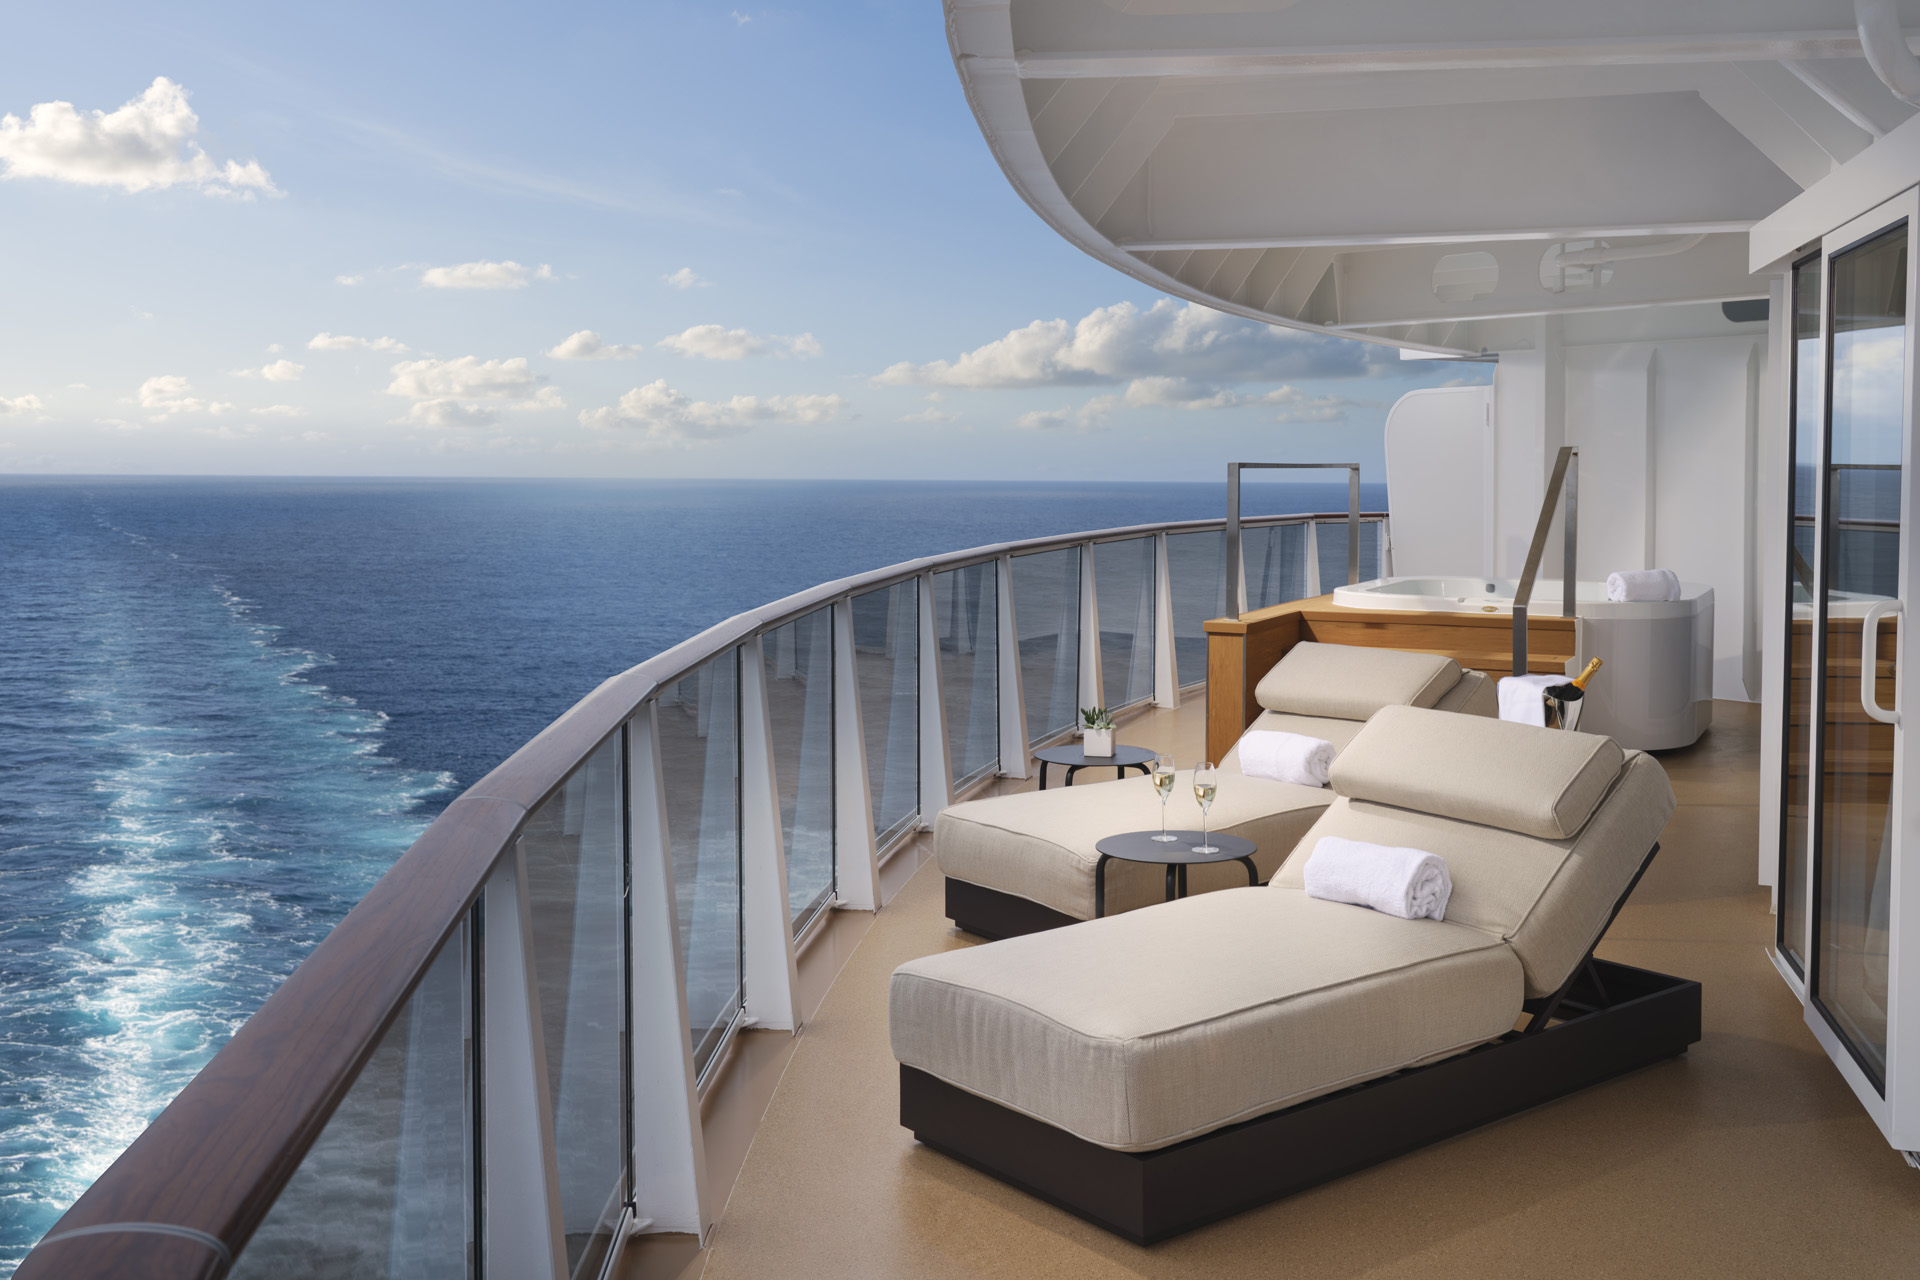 A bedroom balcony aboard the Norwegian Prima